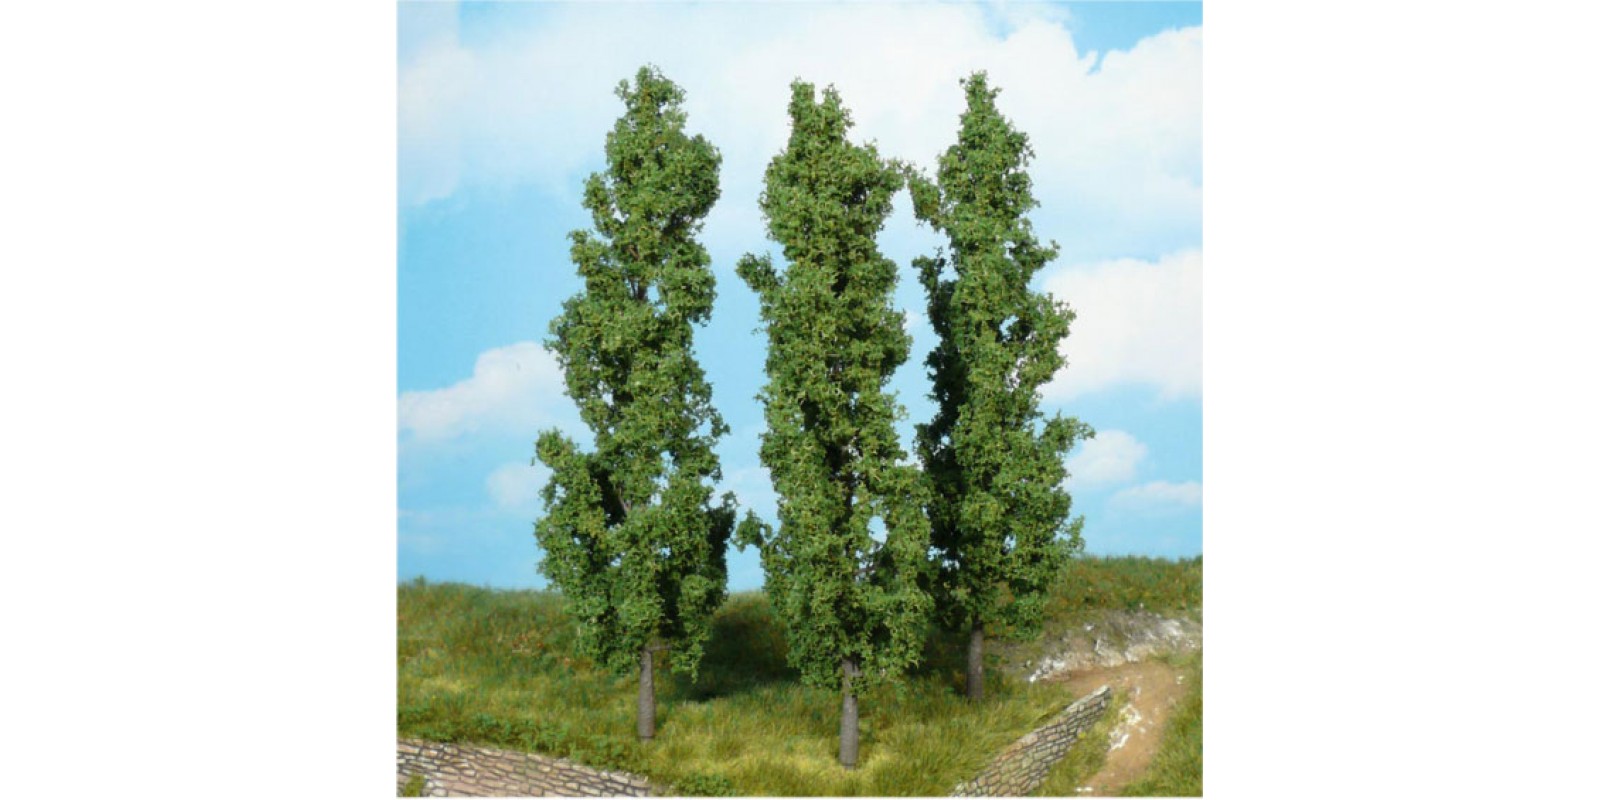 HE1918 3 Poplar trees  from the super artline series, 18cm